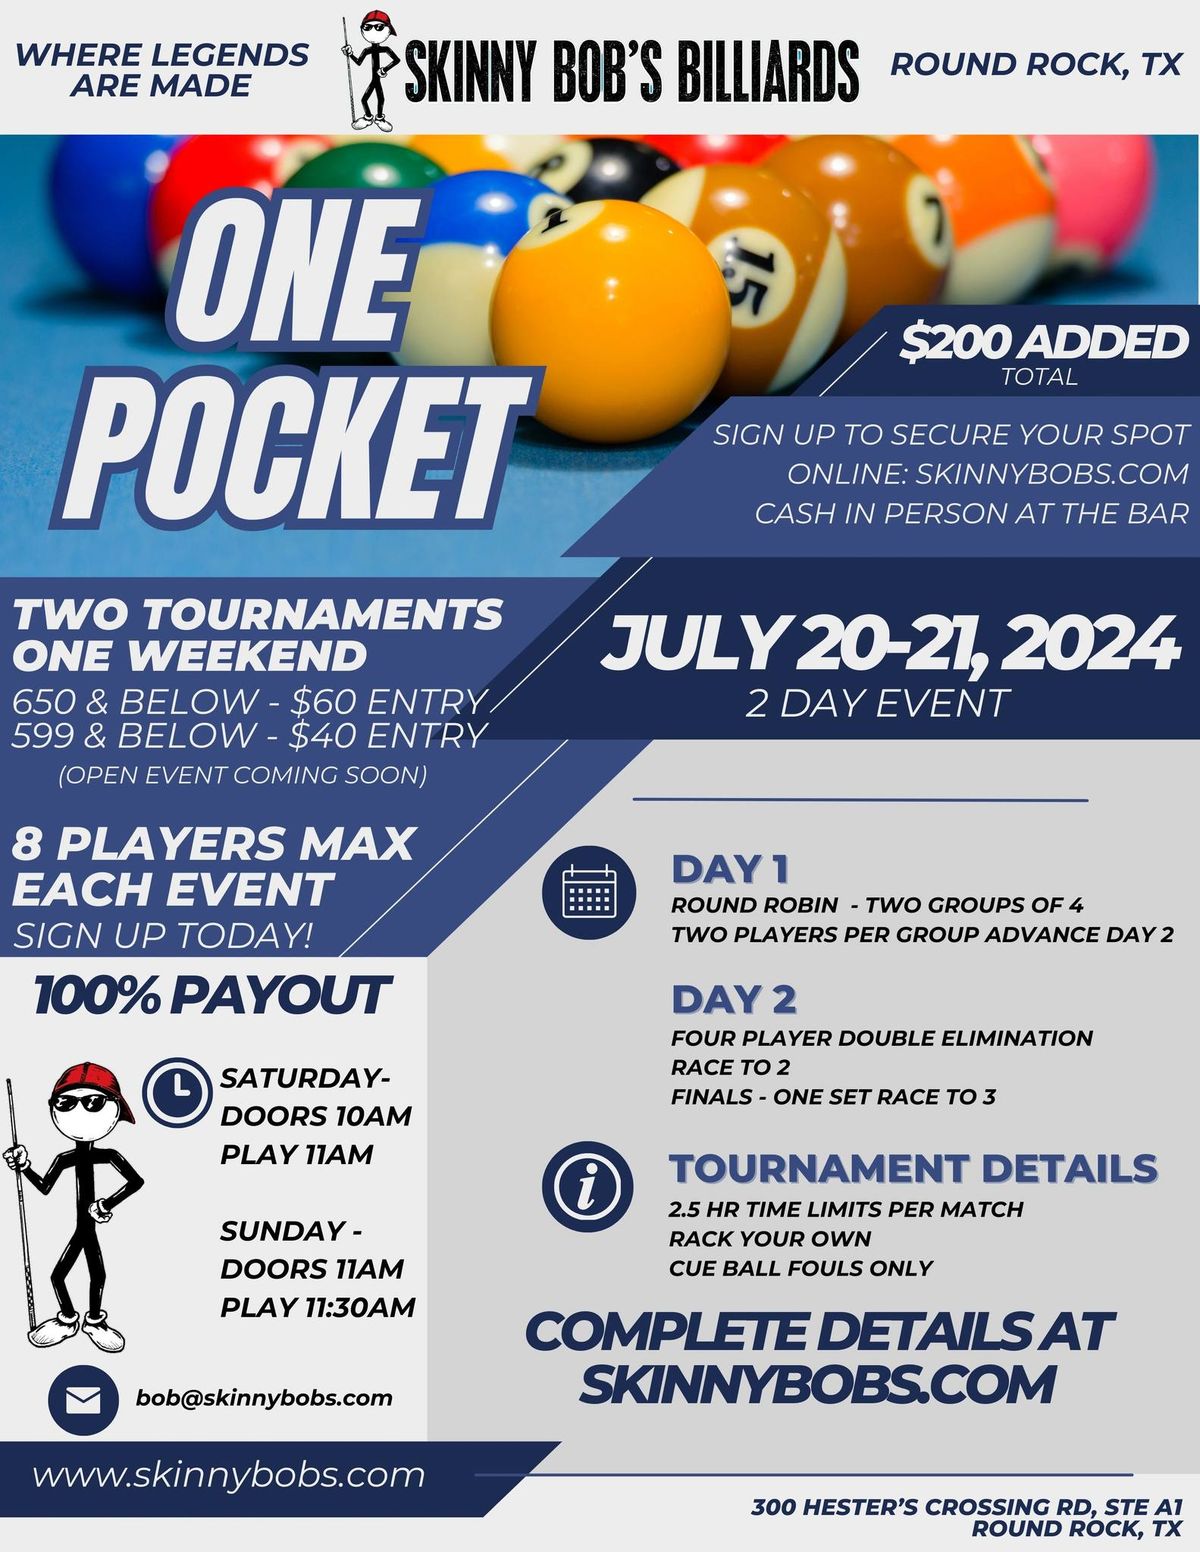 One Pocket Tournament